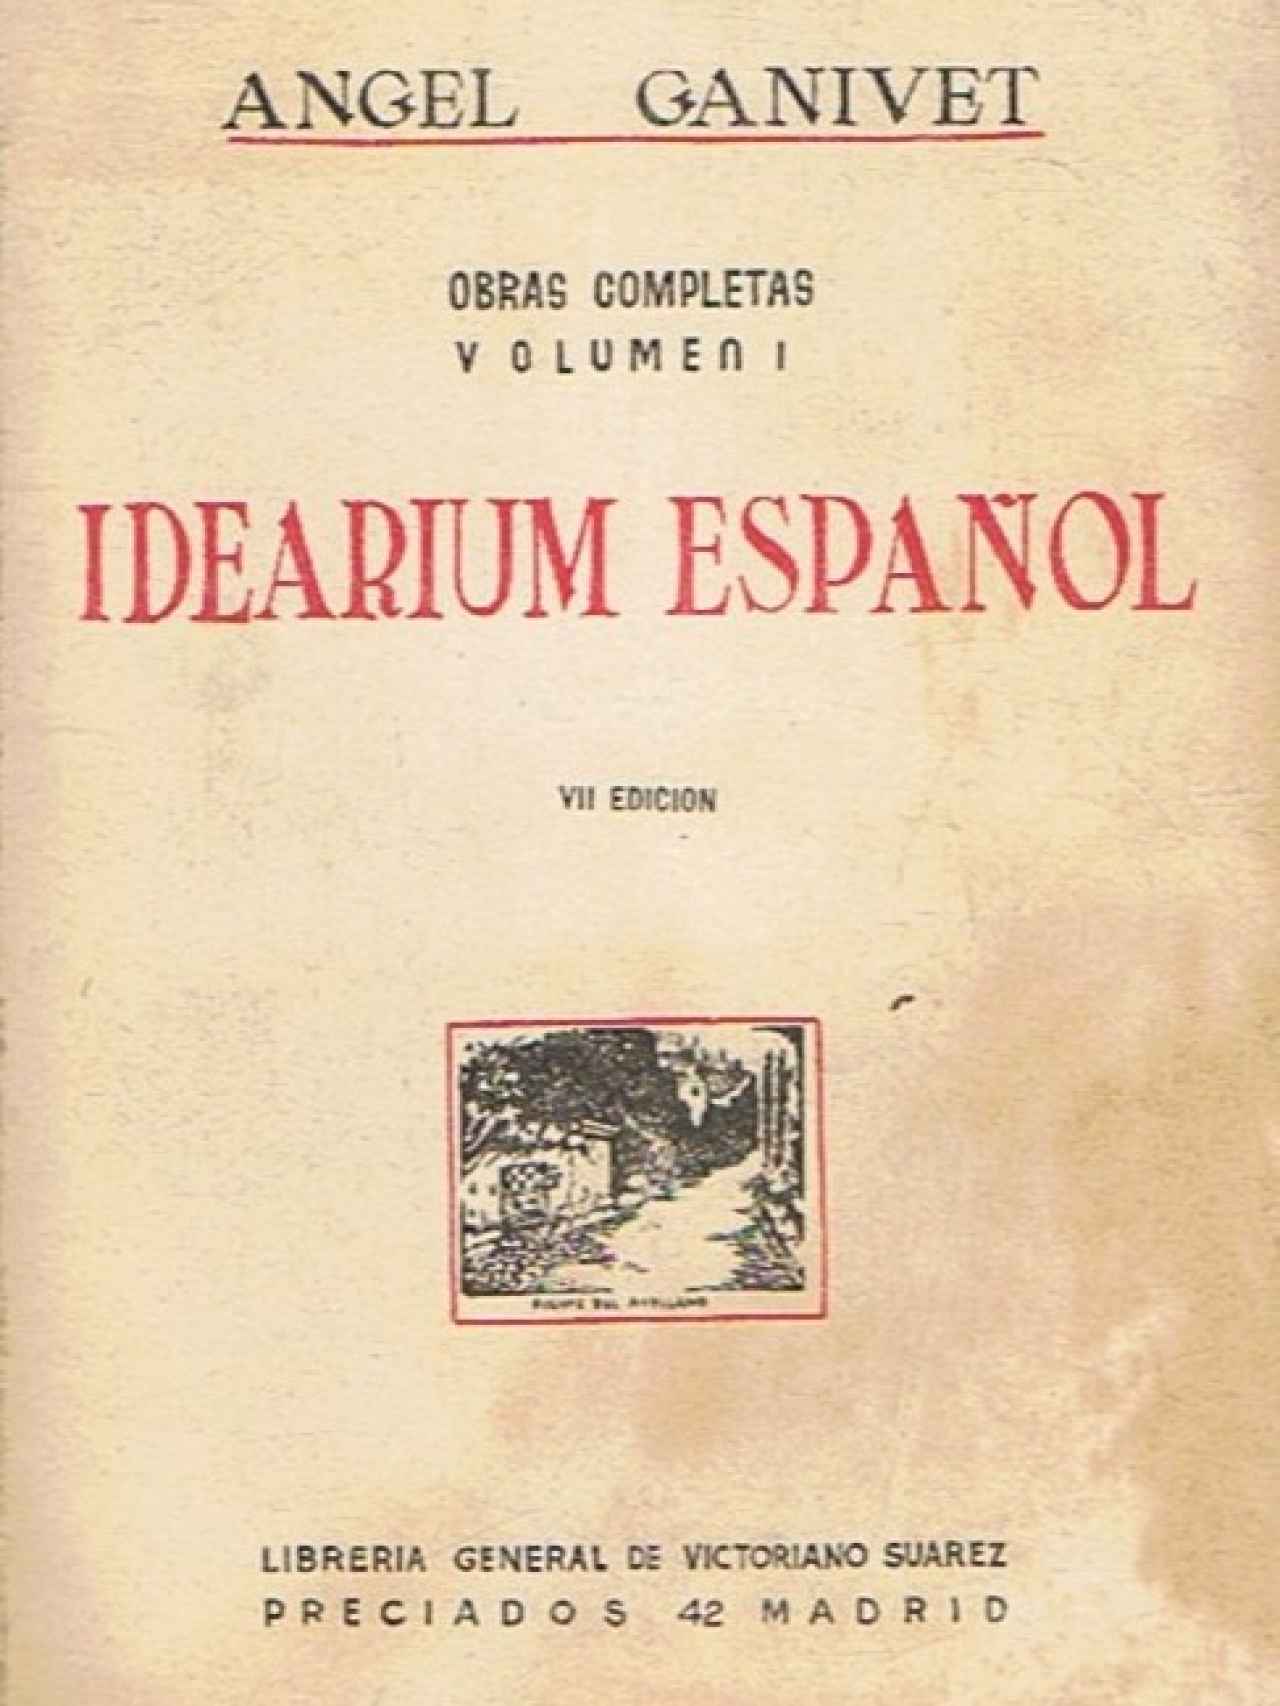 'Idearium español'